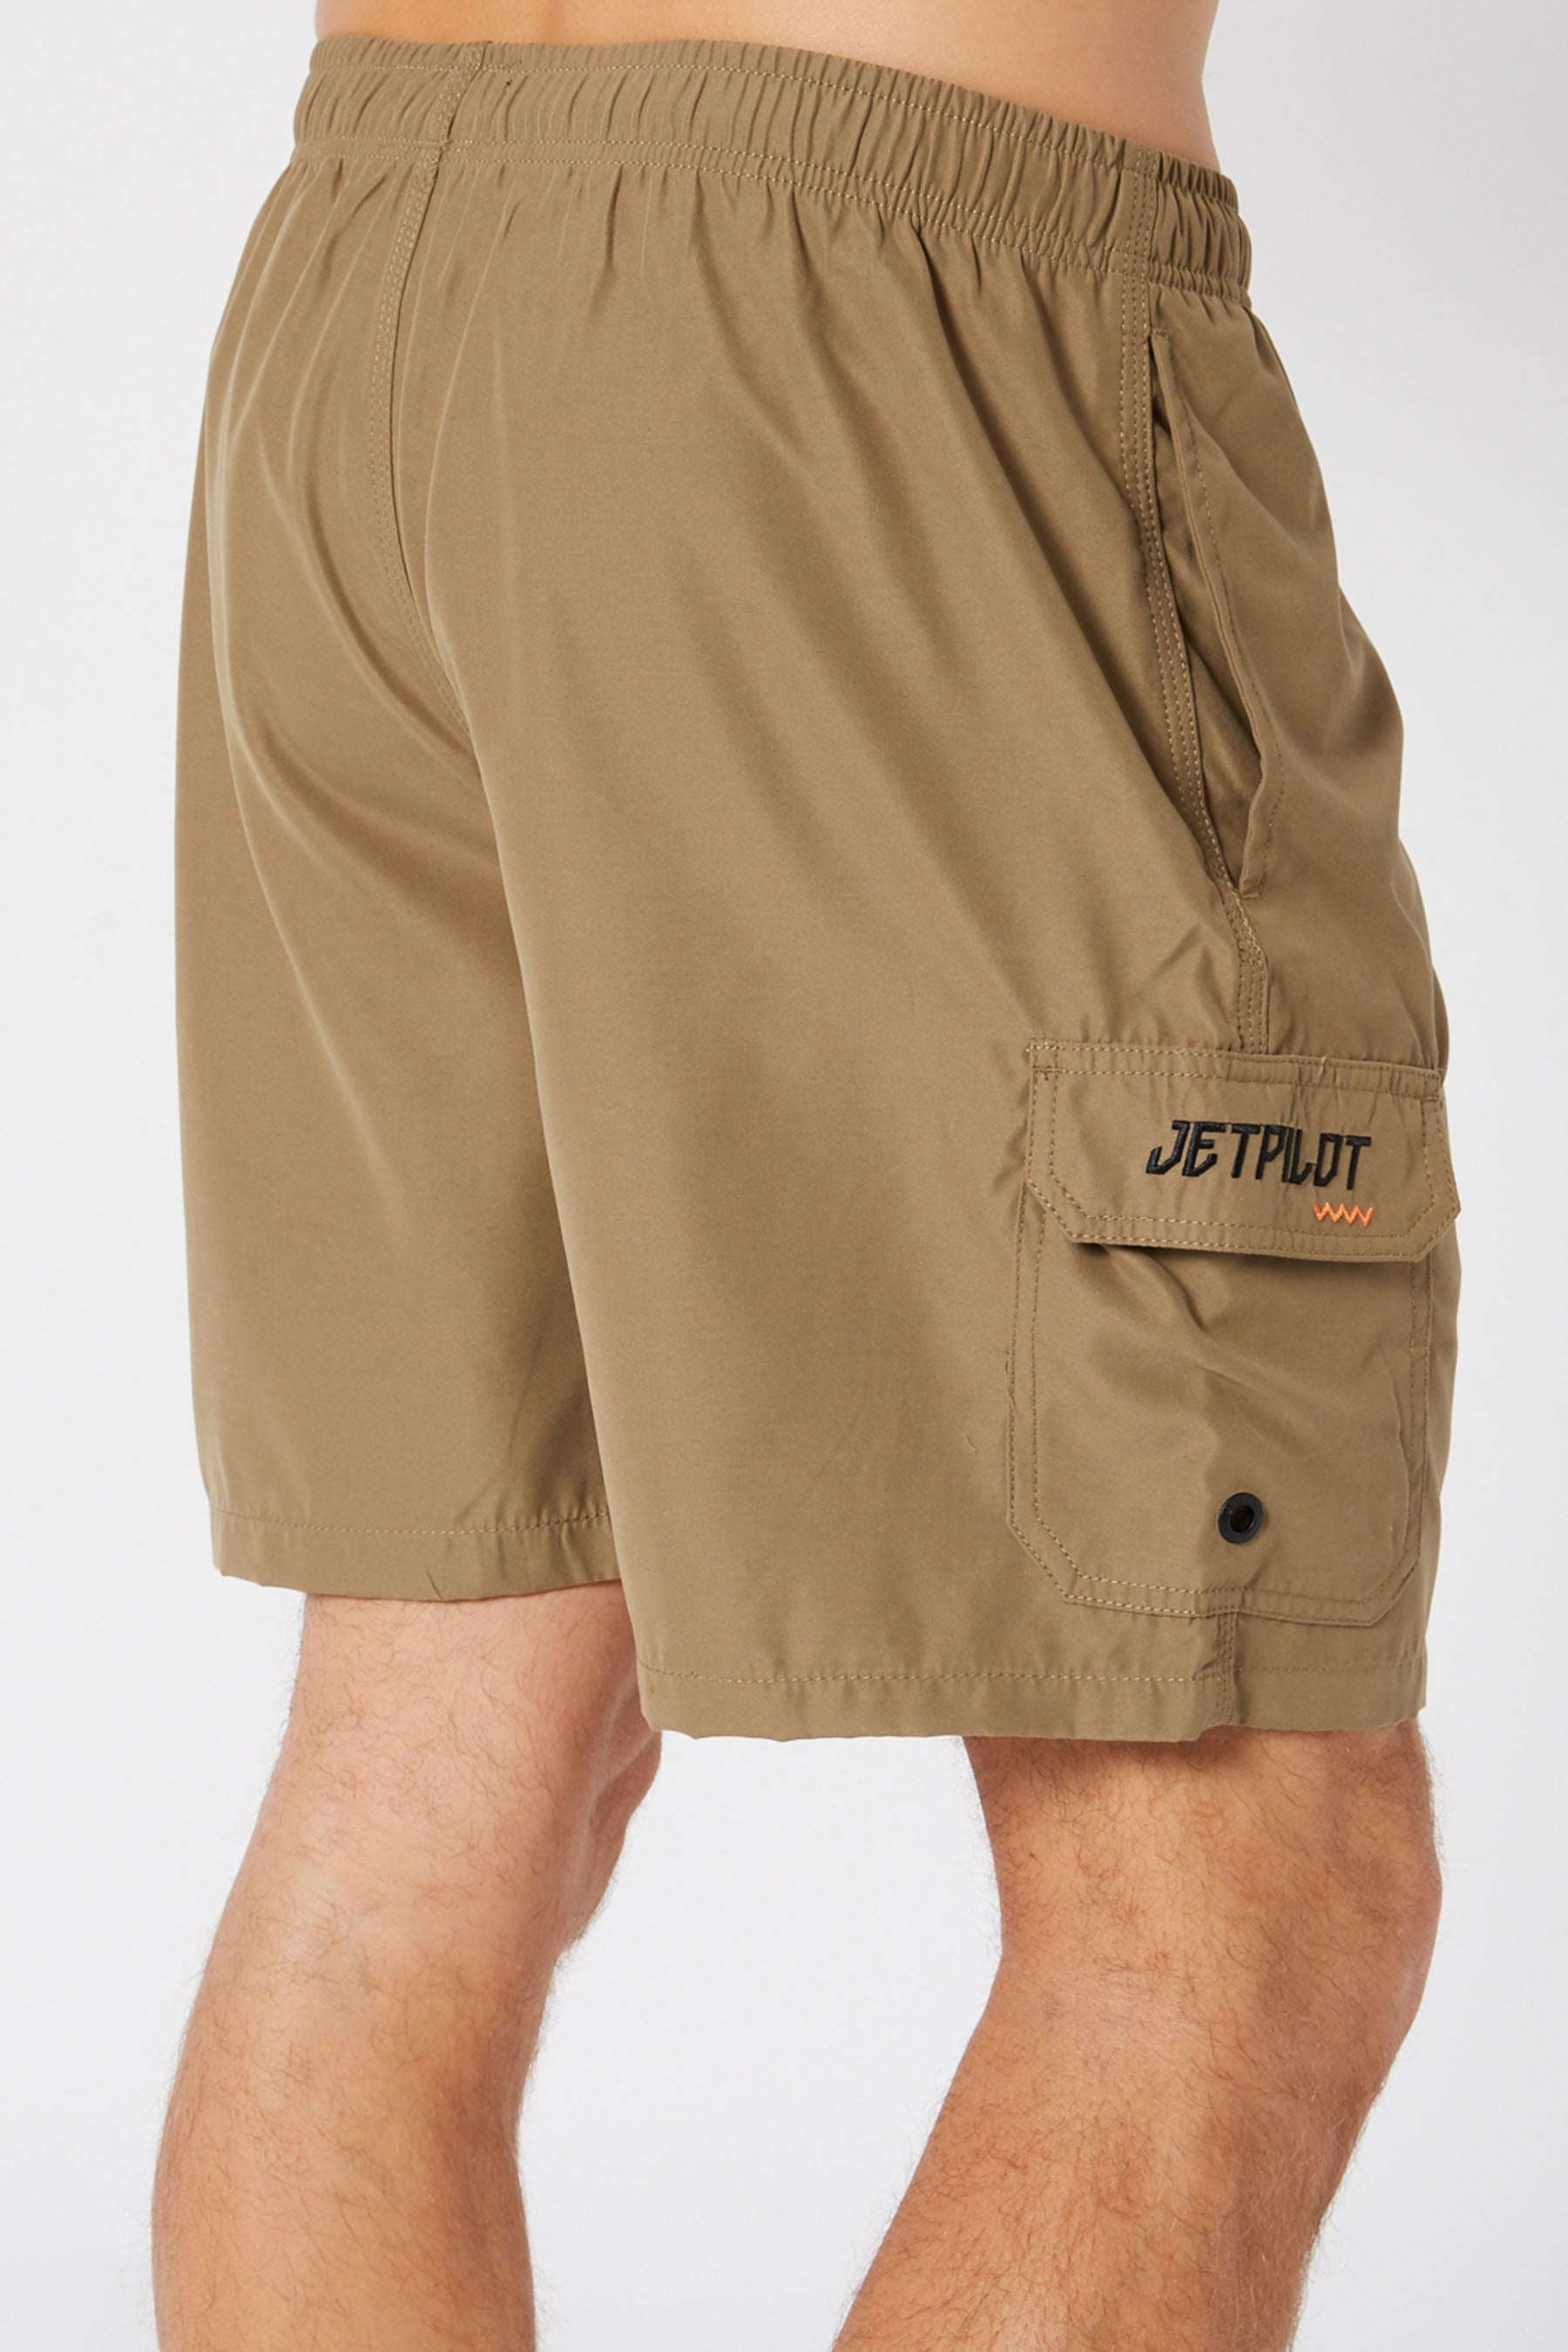 Jetpilot Elasticated Mens Short - Khaki